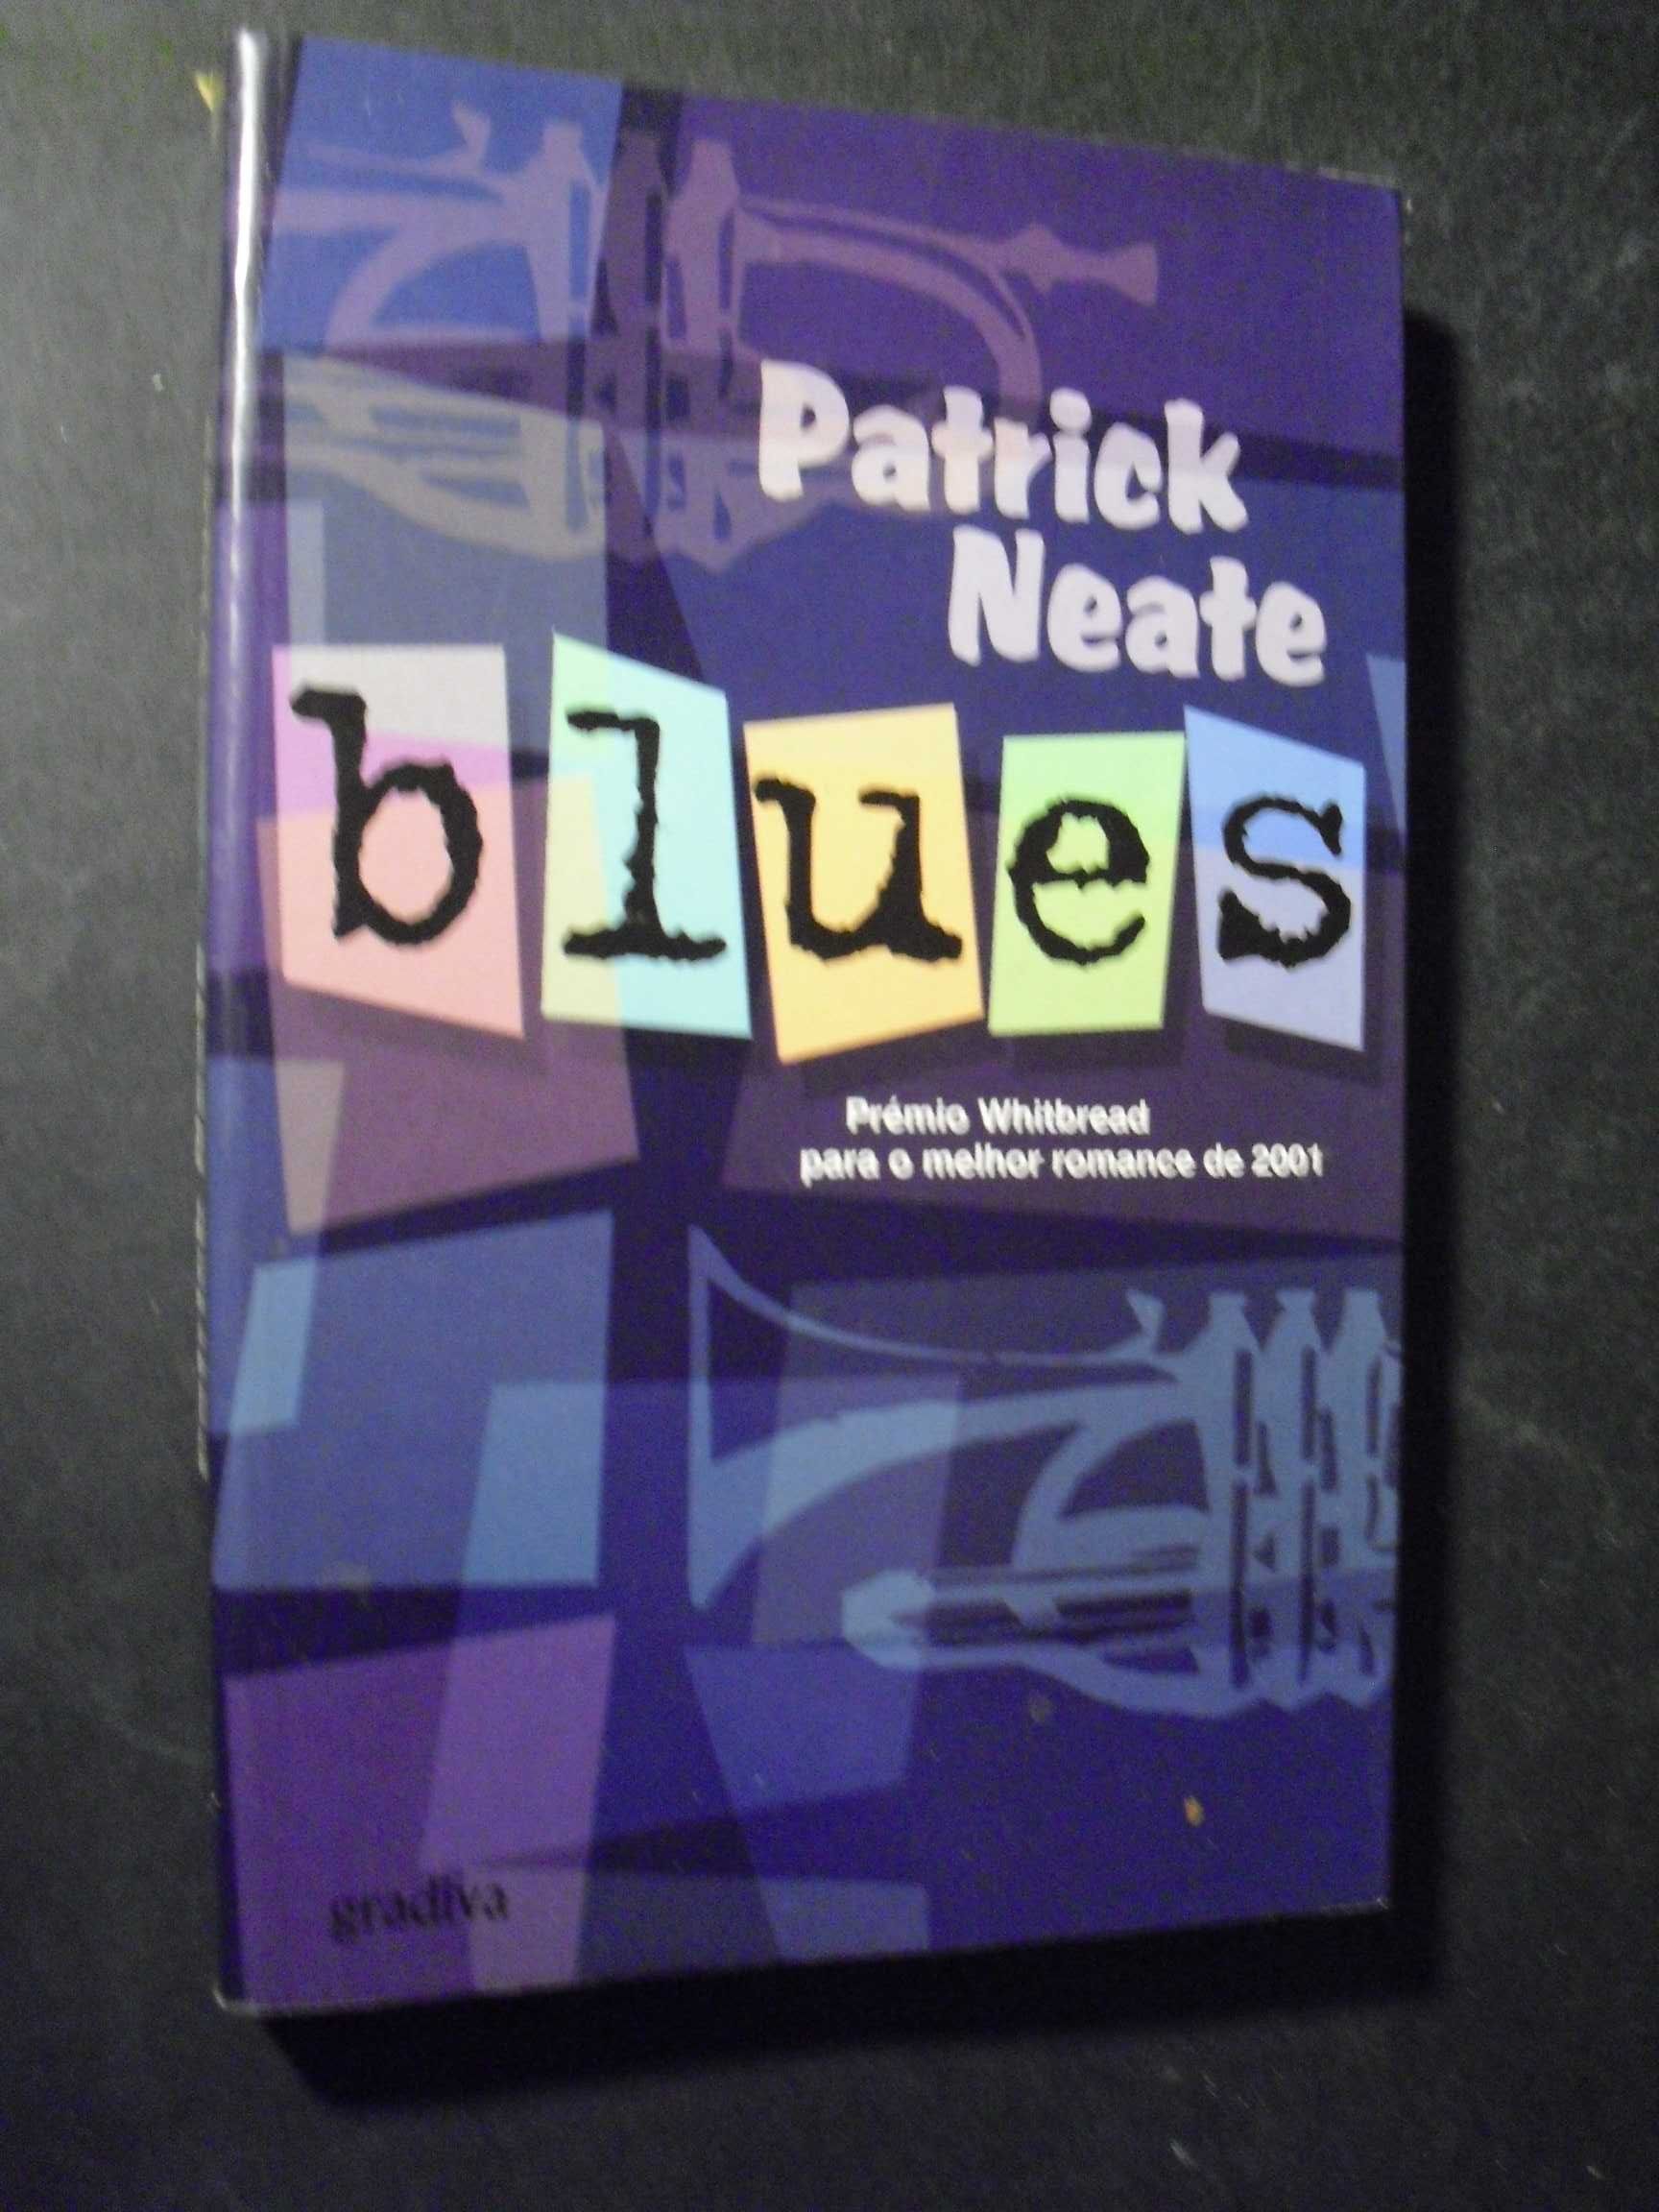 Neate (Patrick);Blues-Prémio Whitebread para o Melhor Romance